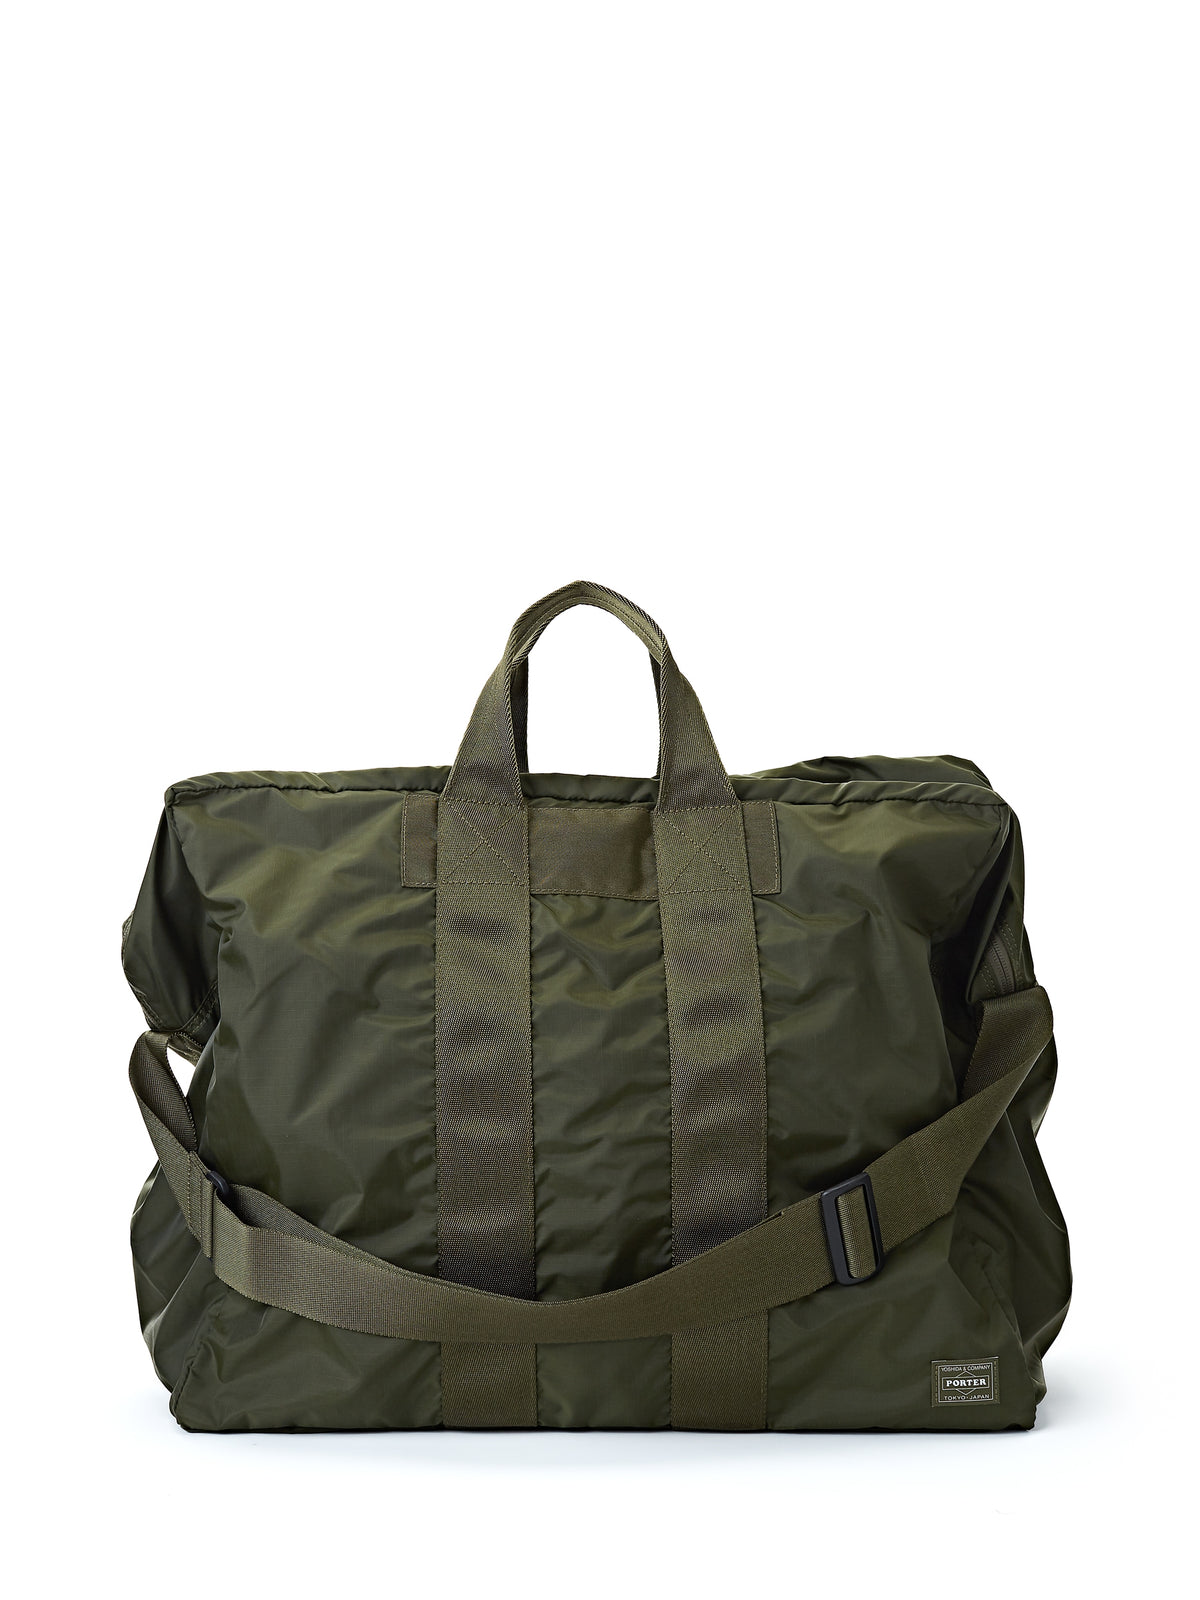 Porter-Yoshida & Co 2-way Flex Duffle Bag Olive – Oliver Spencer